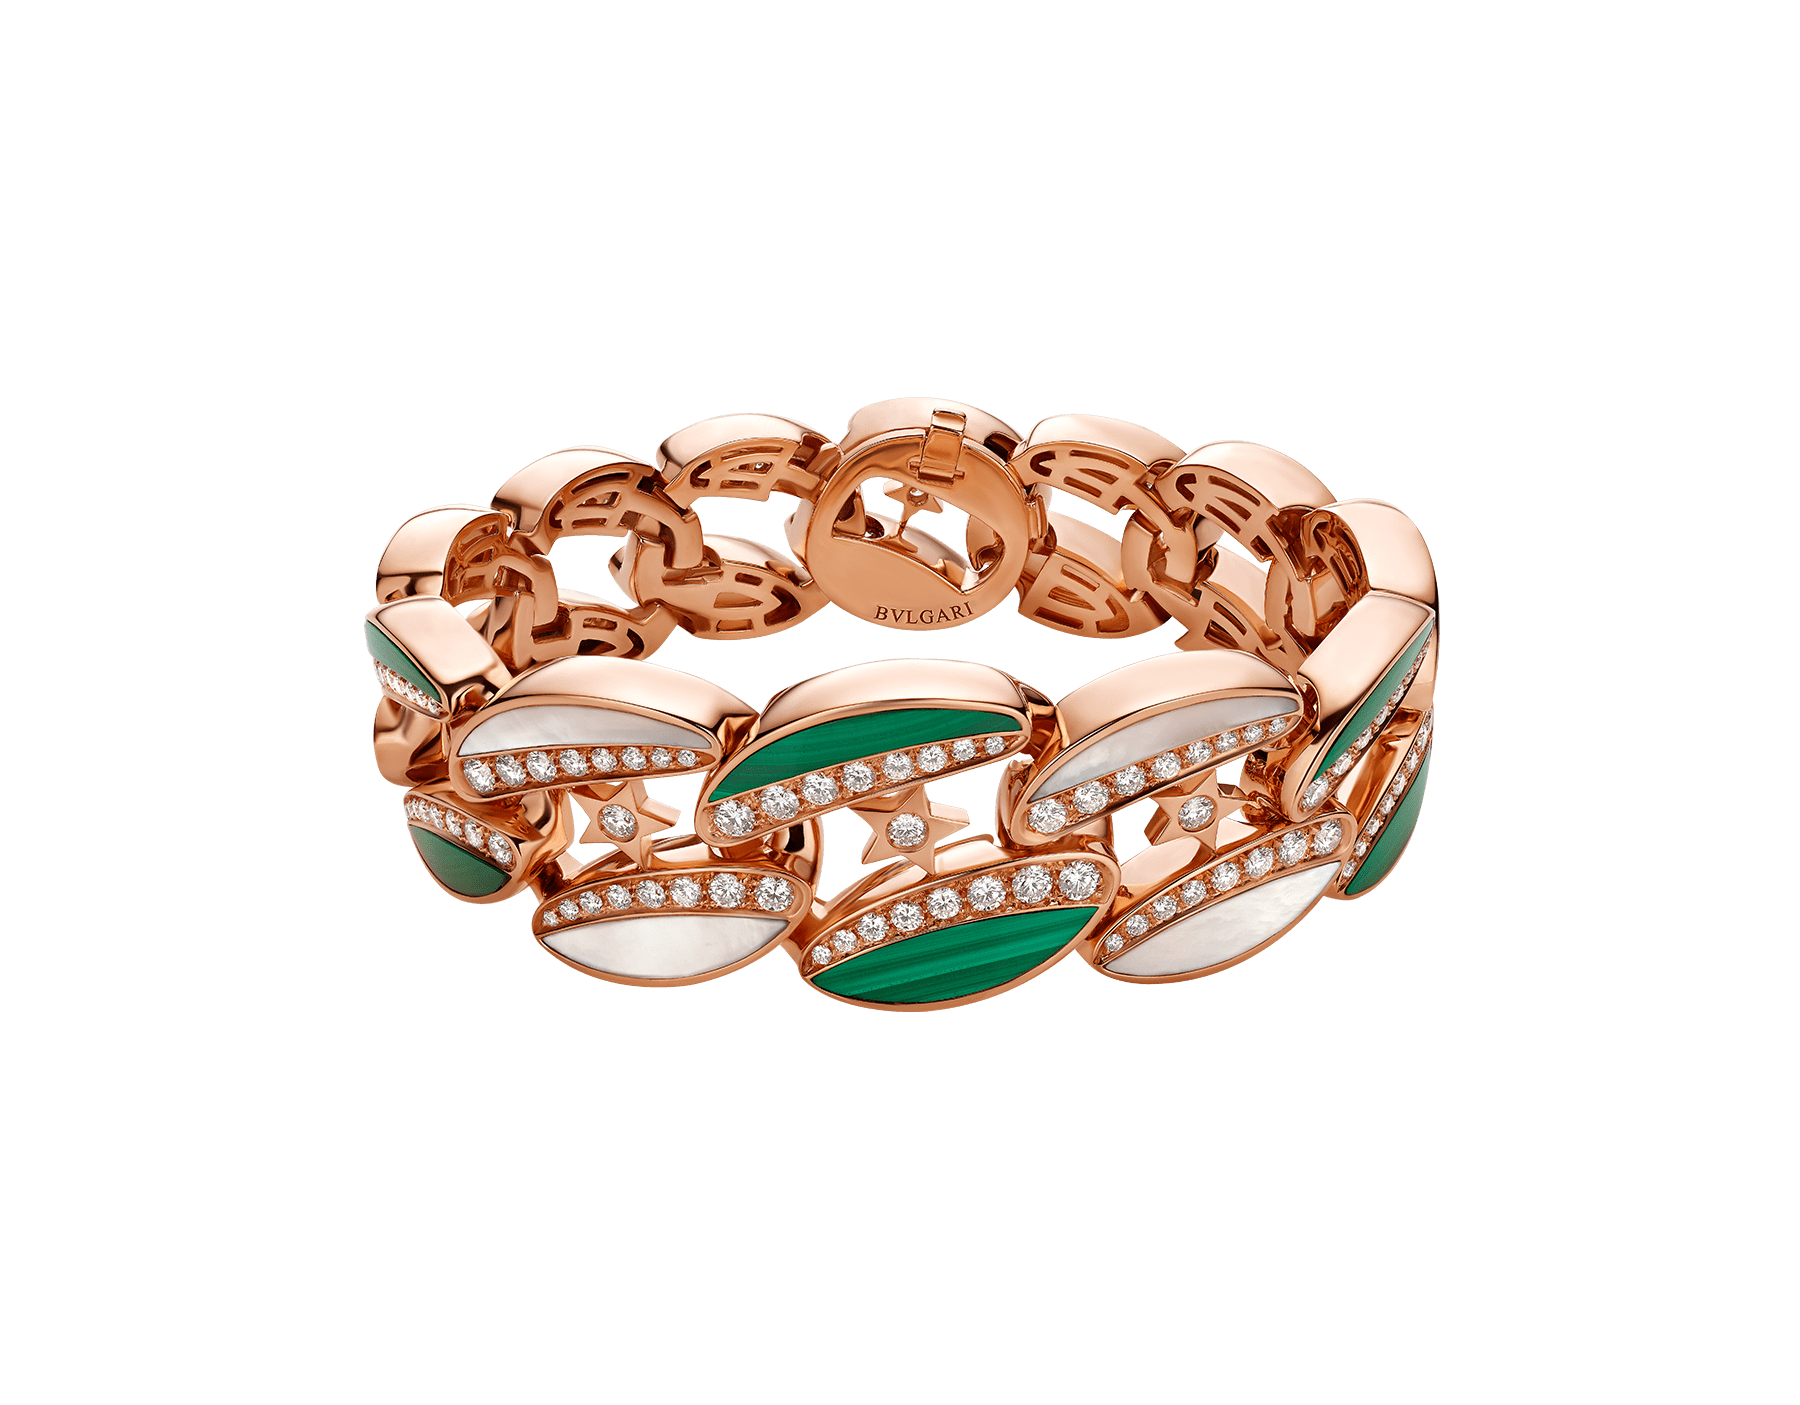 bulgari jewelry design